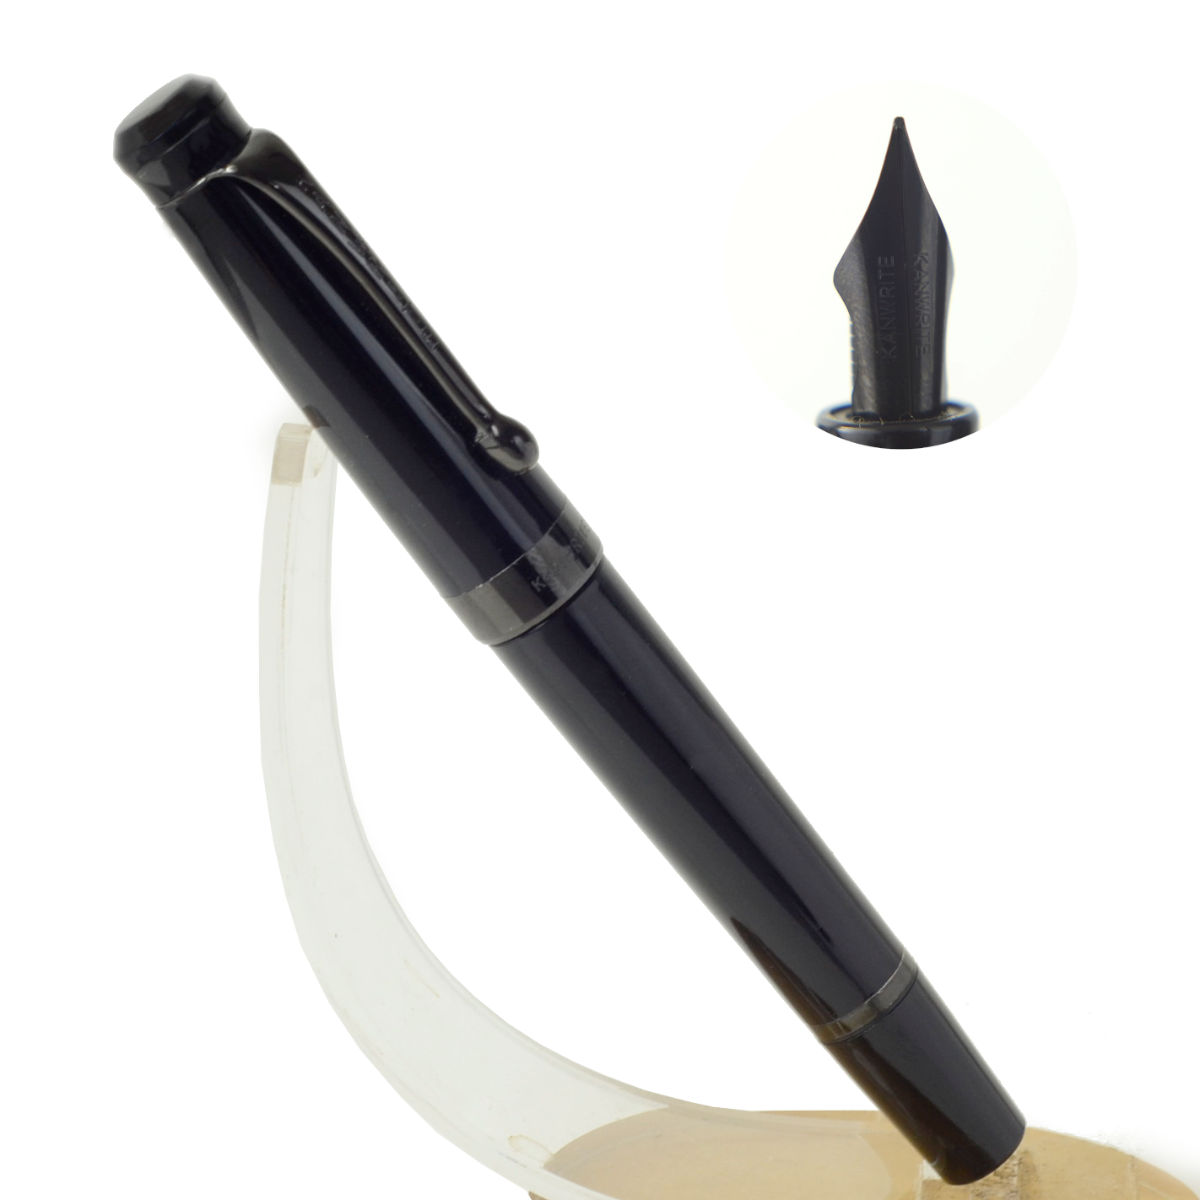 Kanwrite Heritage ebony black piston filler fountain pen  – Full flex PVD black nib